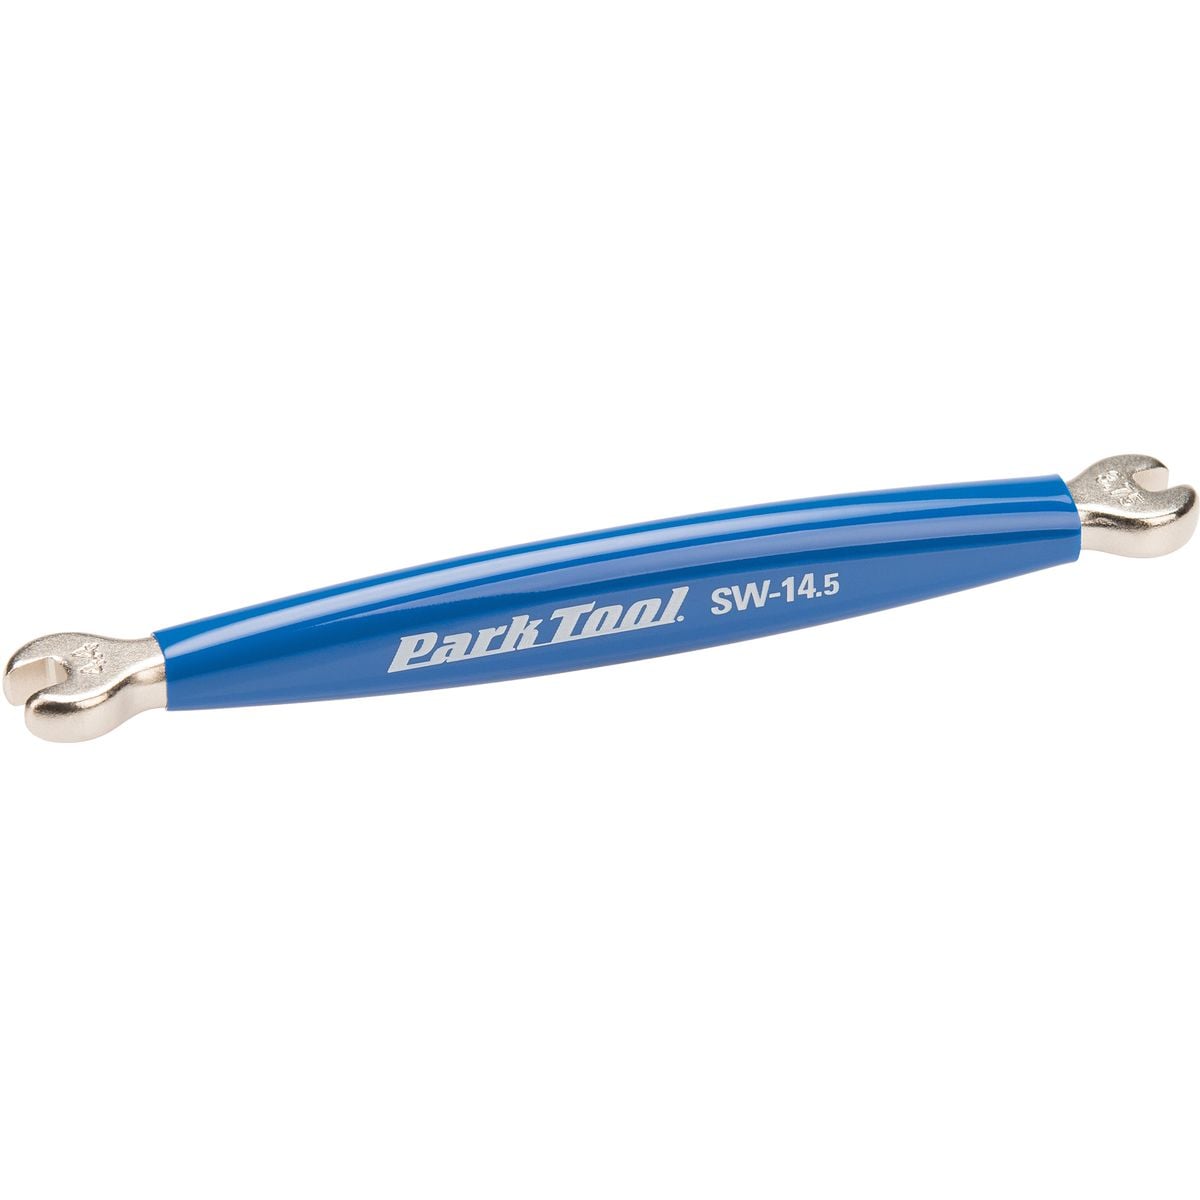 Sw-14.5 спицеевый ключ shimano wheel systems Park Tool, синий